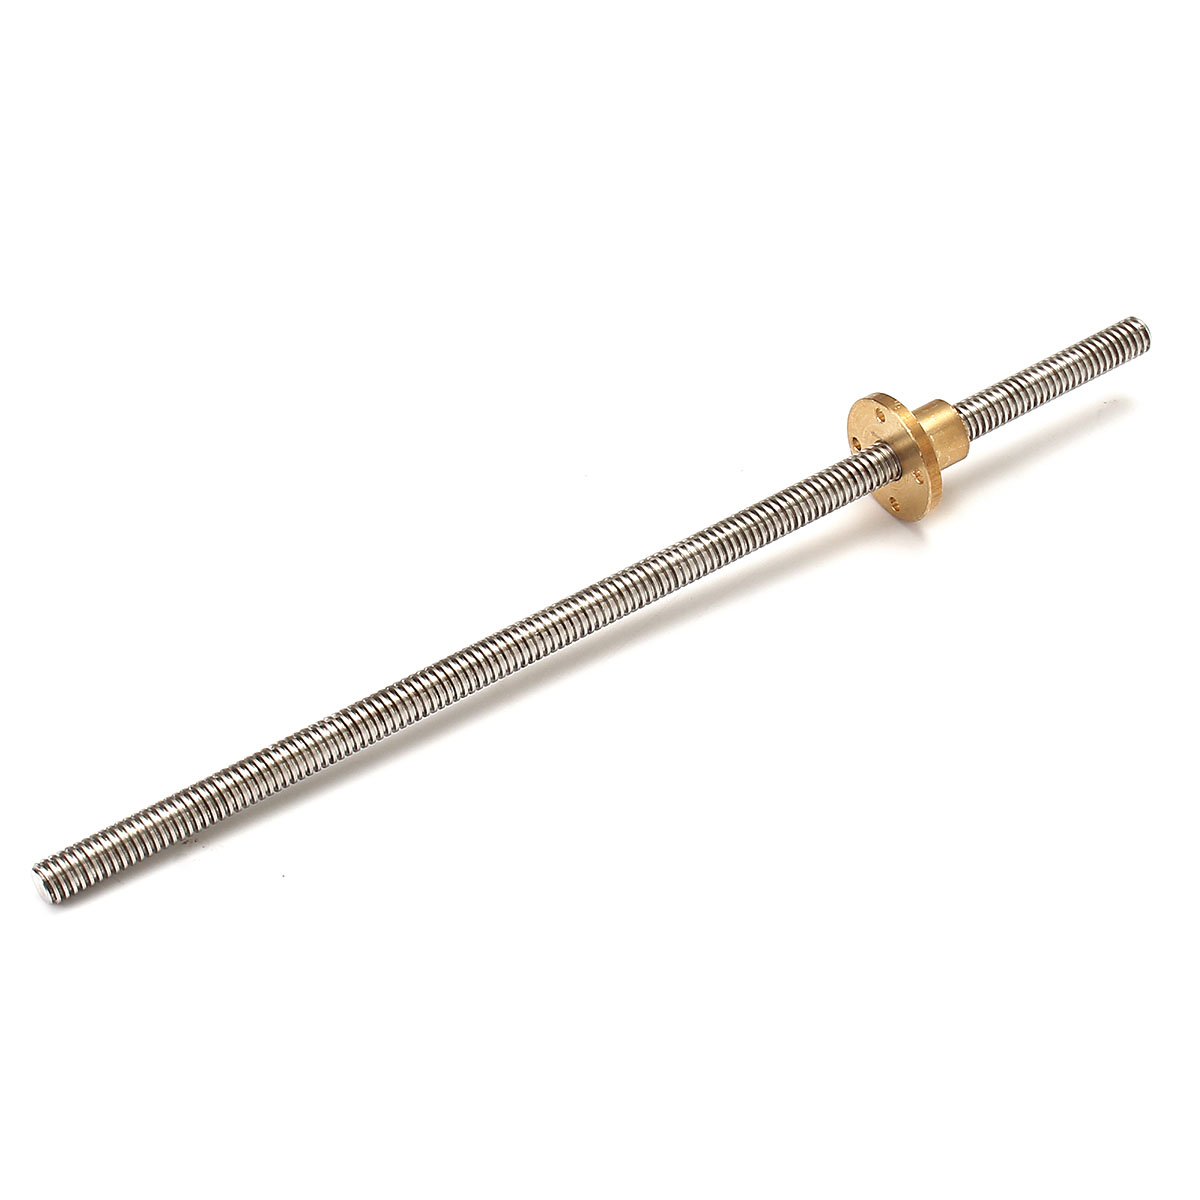 Machifit-T10-Lead-Screw-Nut-10mm-Brass-Nut-for-CNC-1274994-10